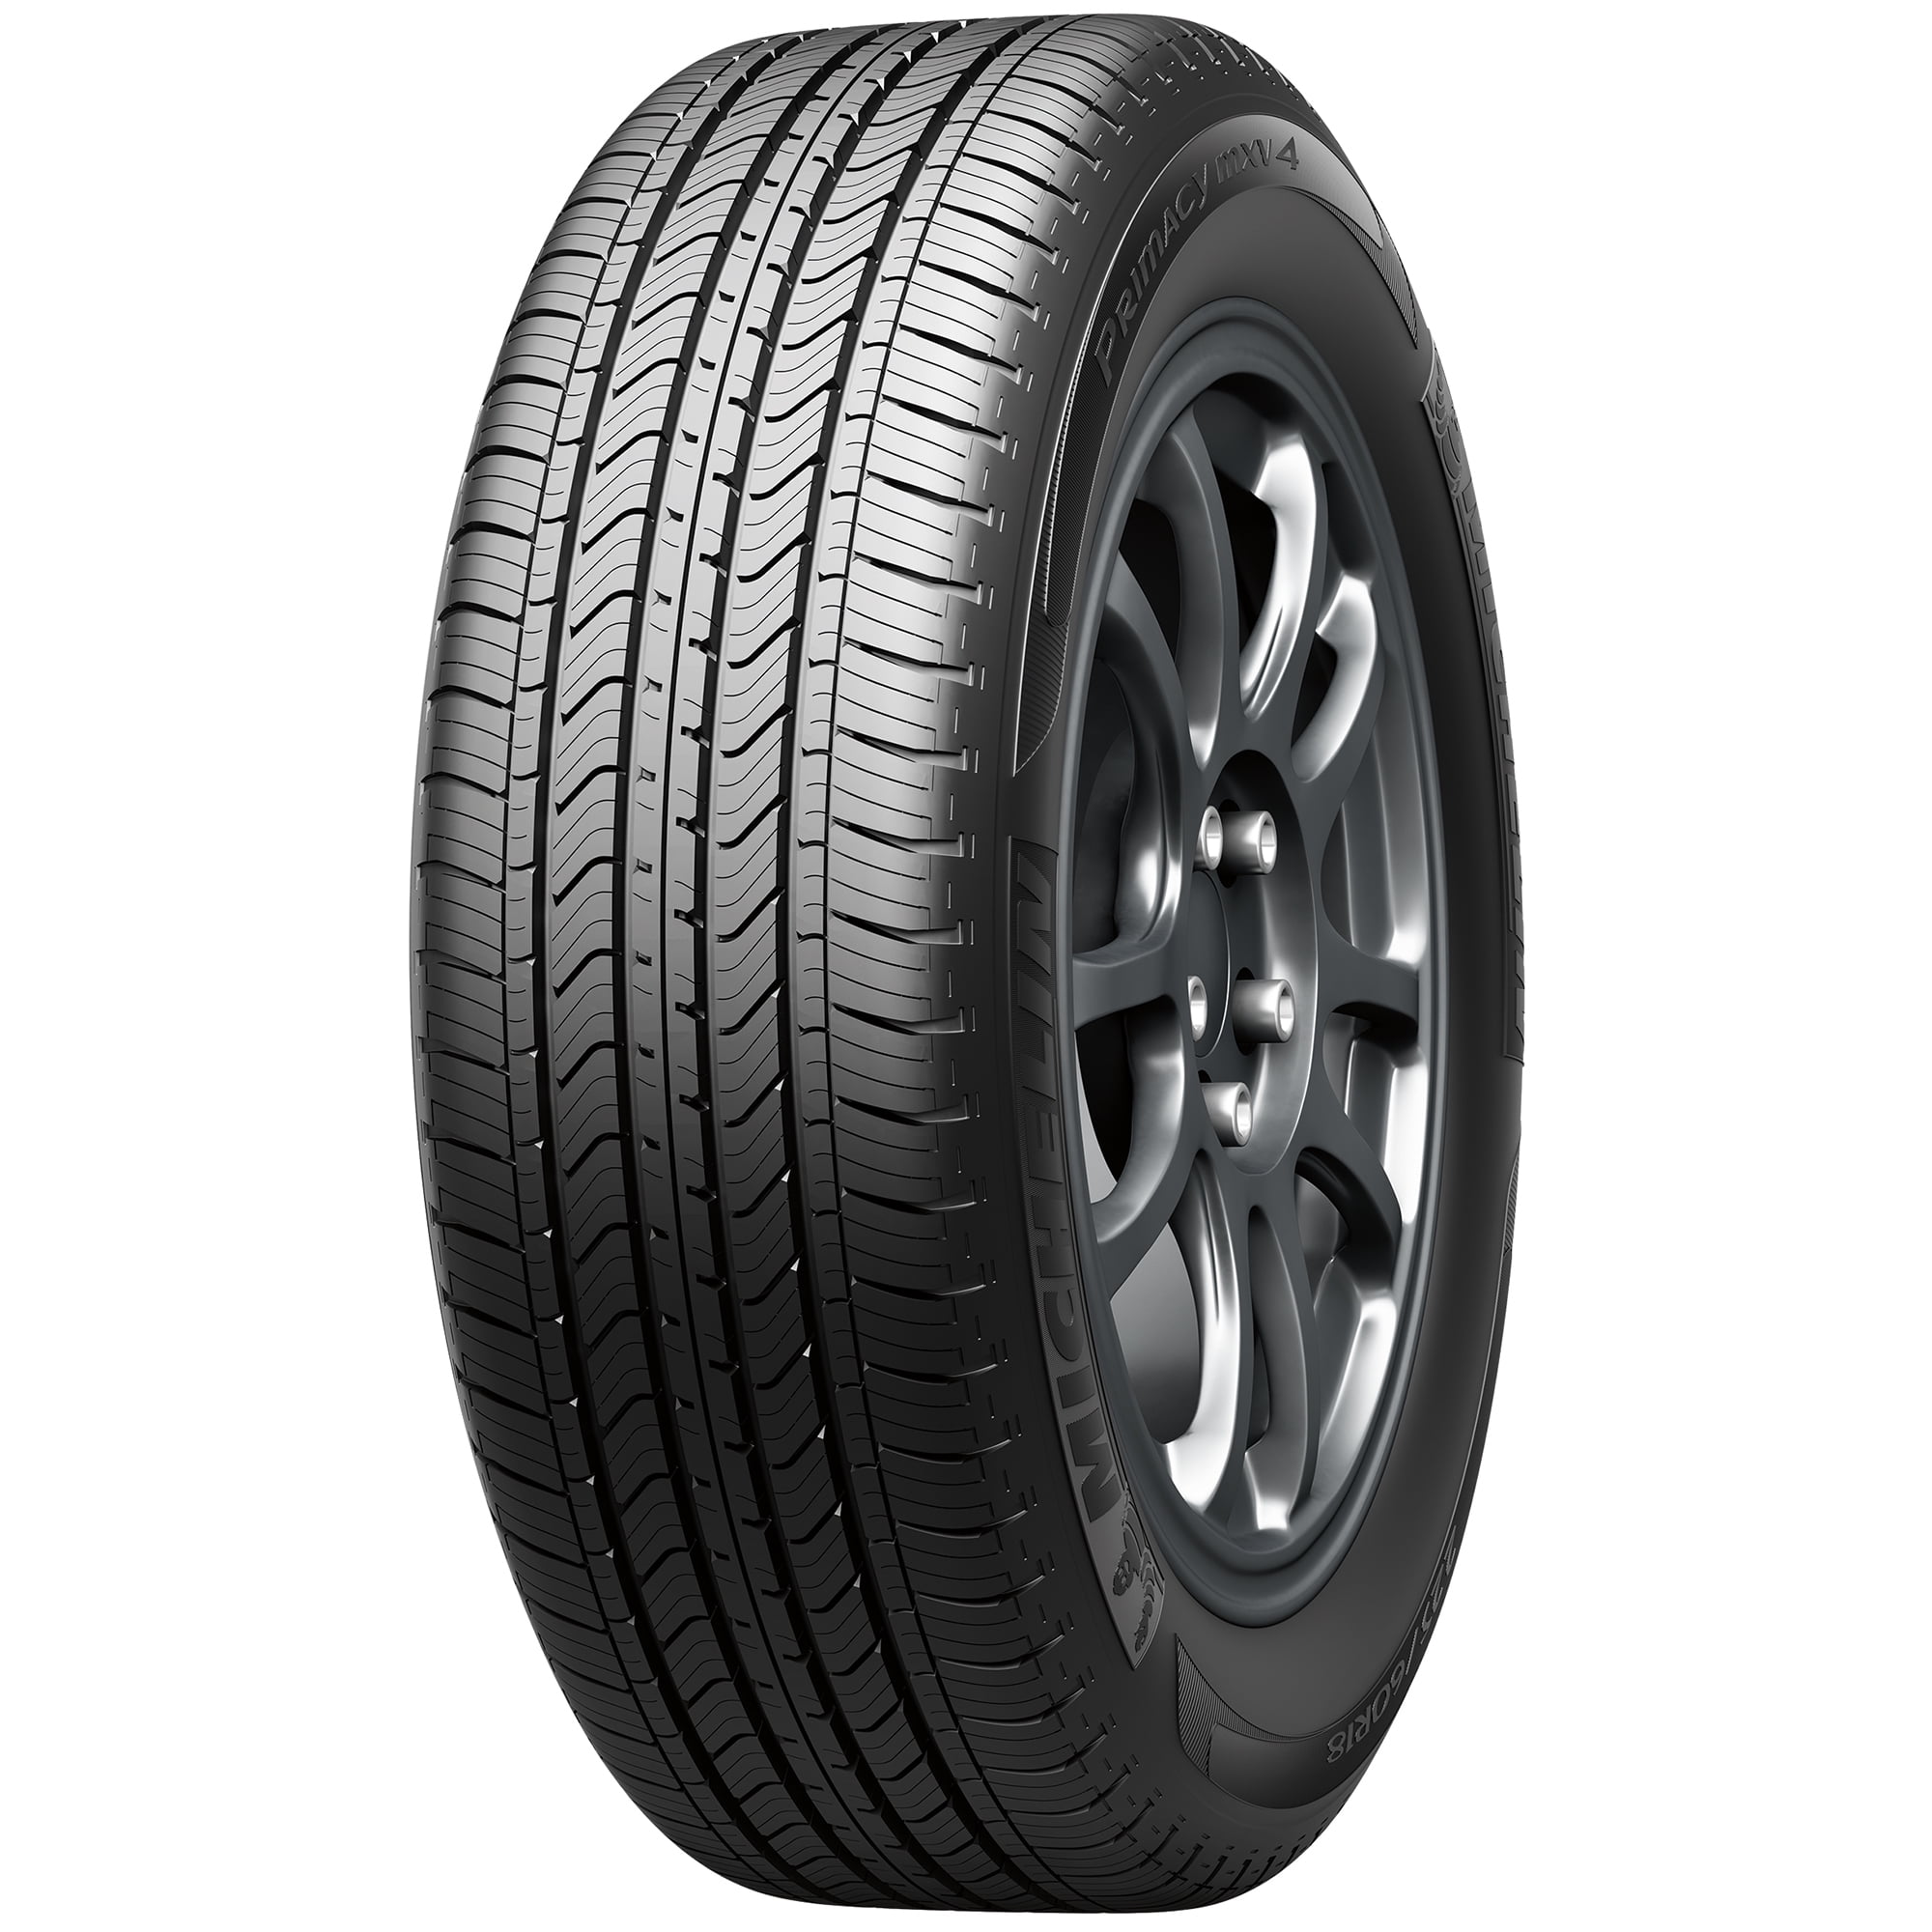 Michelin Primacy MXV4 All-Season Highway Tire 205/65R16 95H